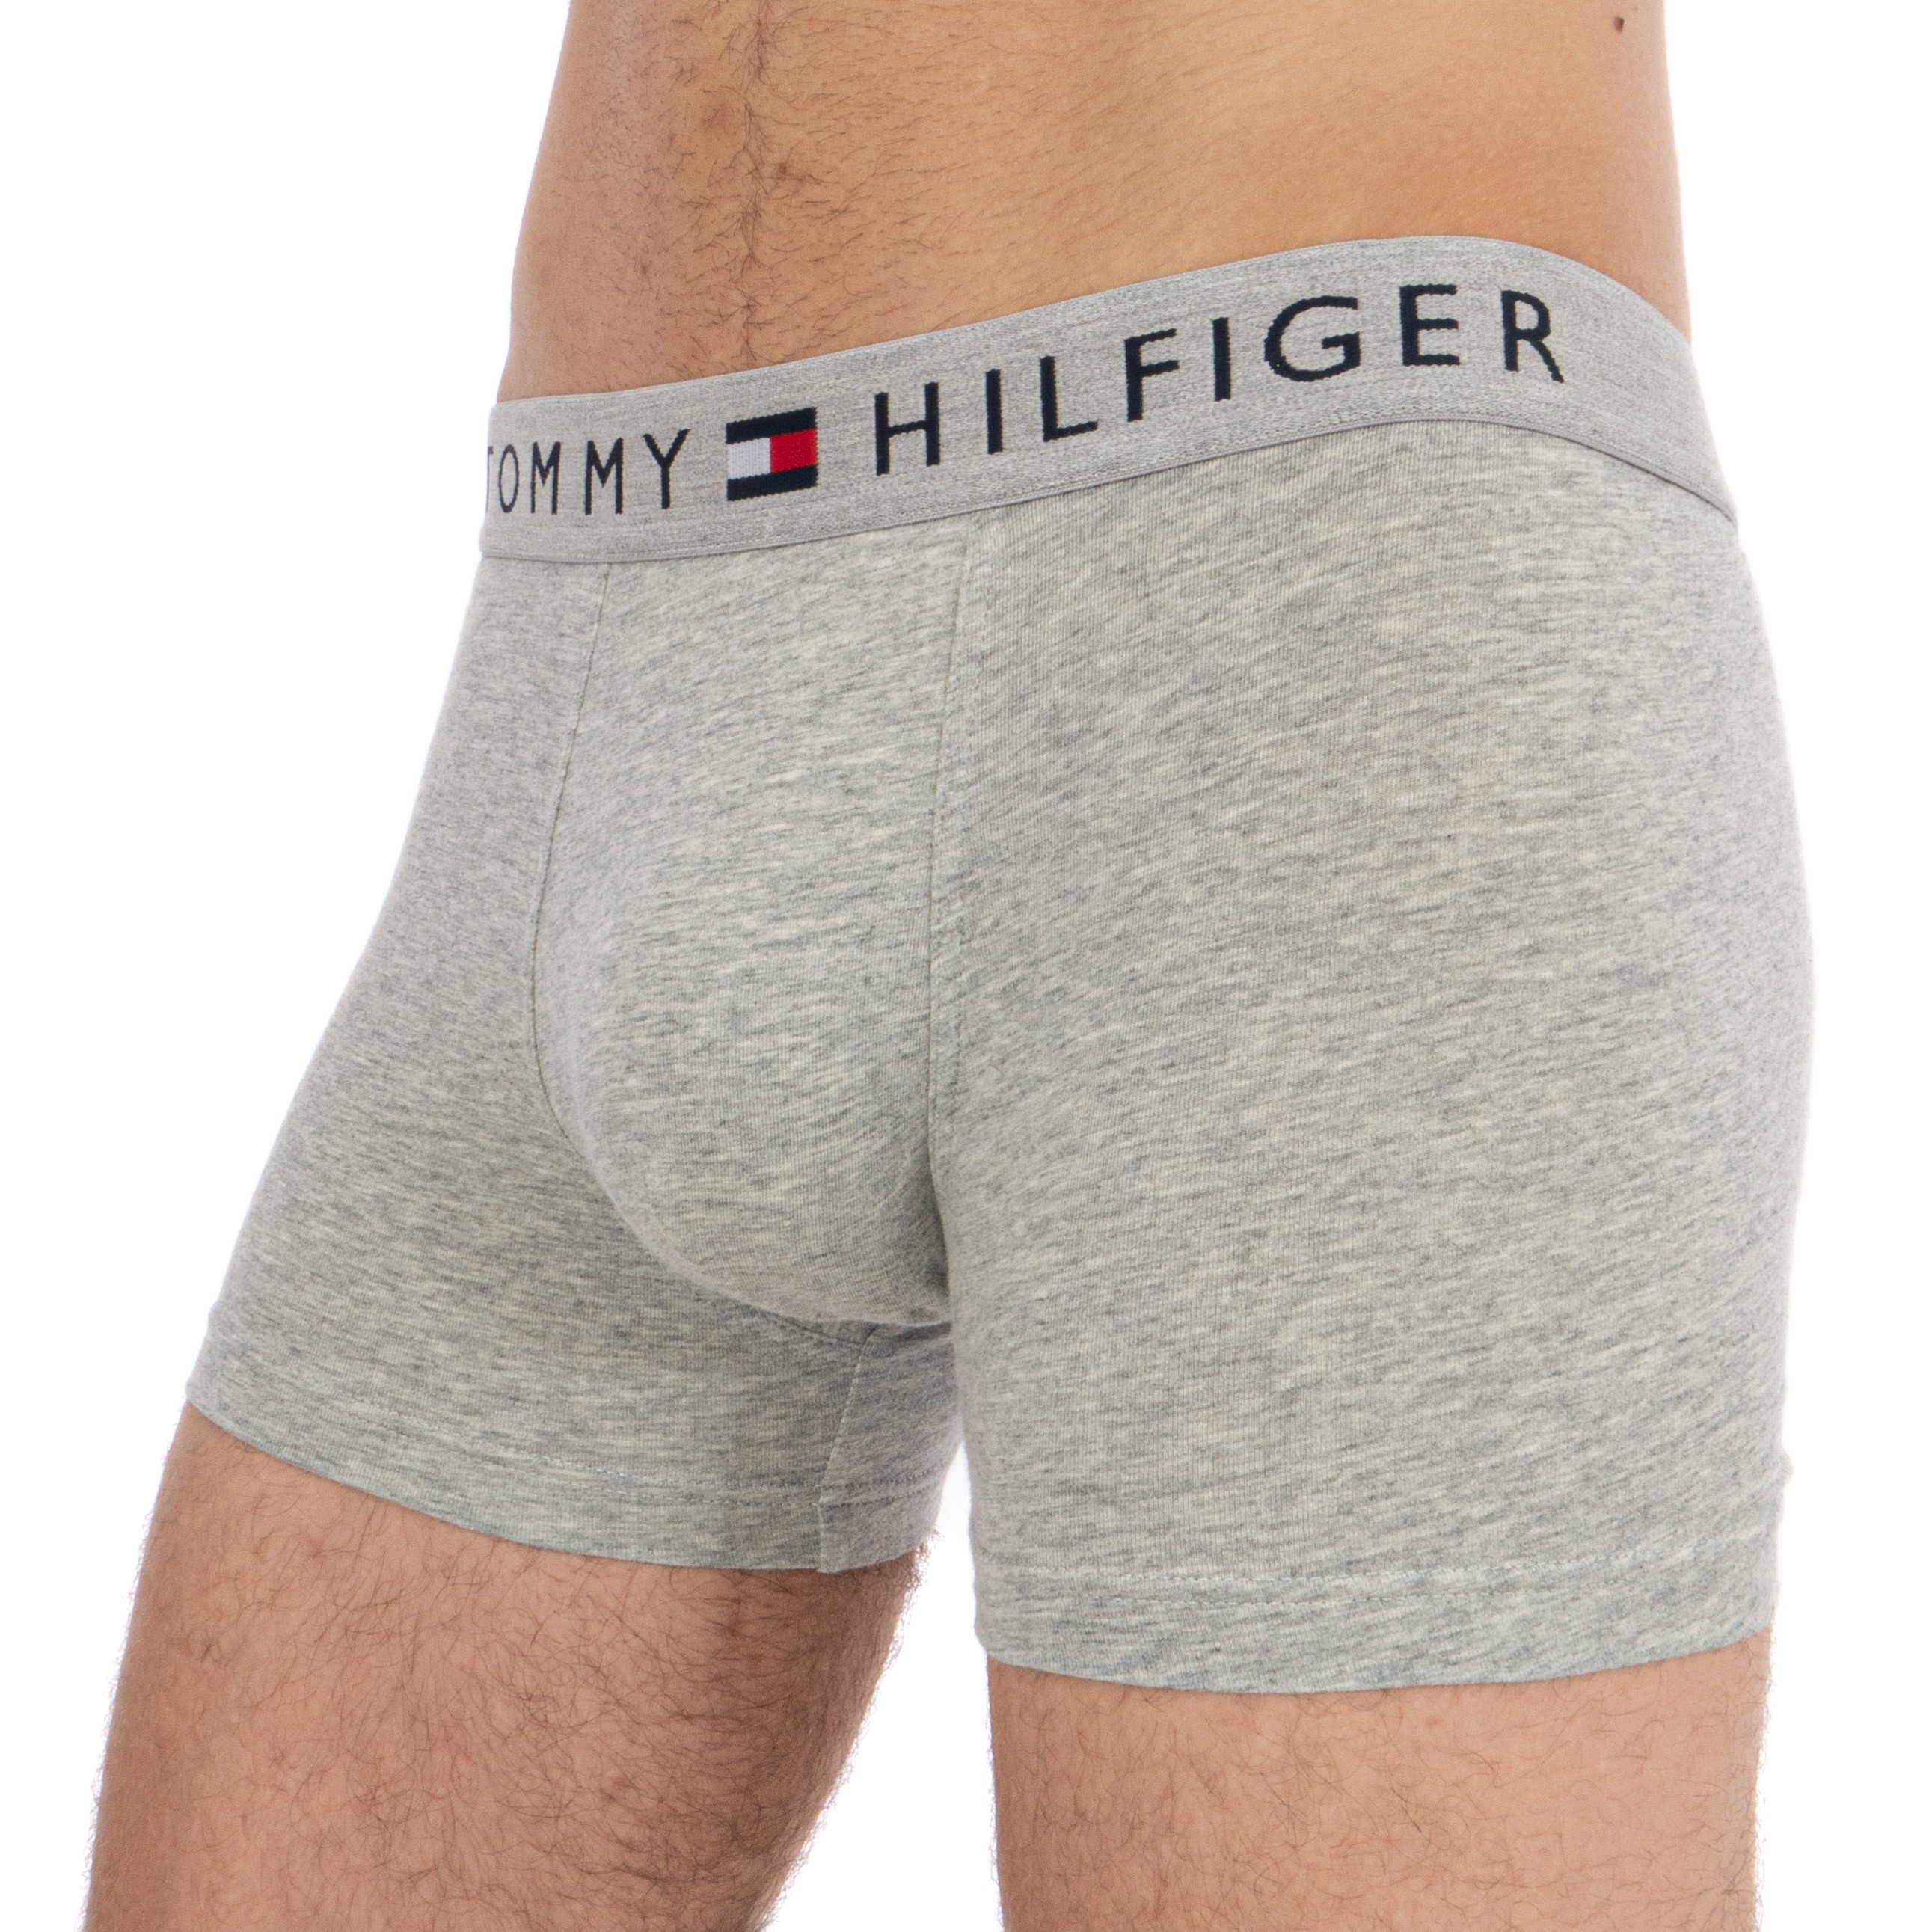 hilfiger boxer shorts